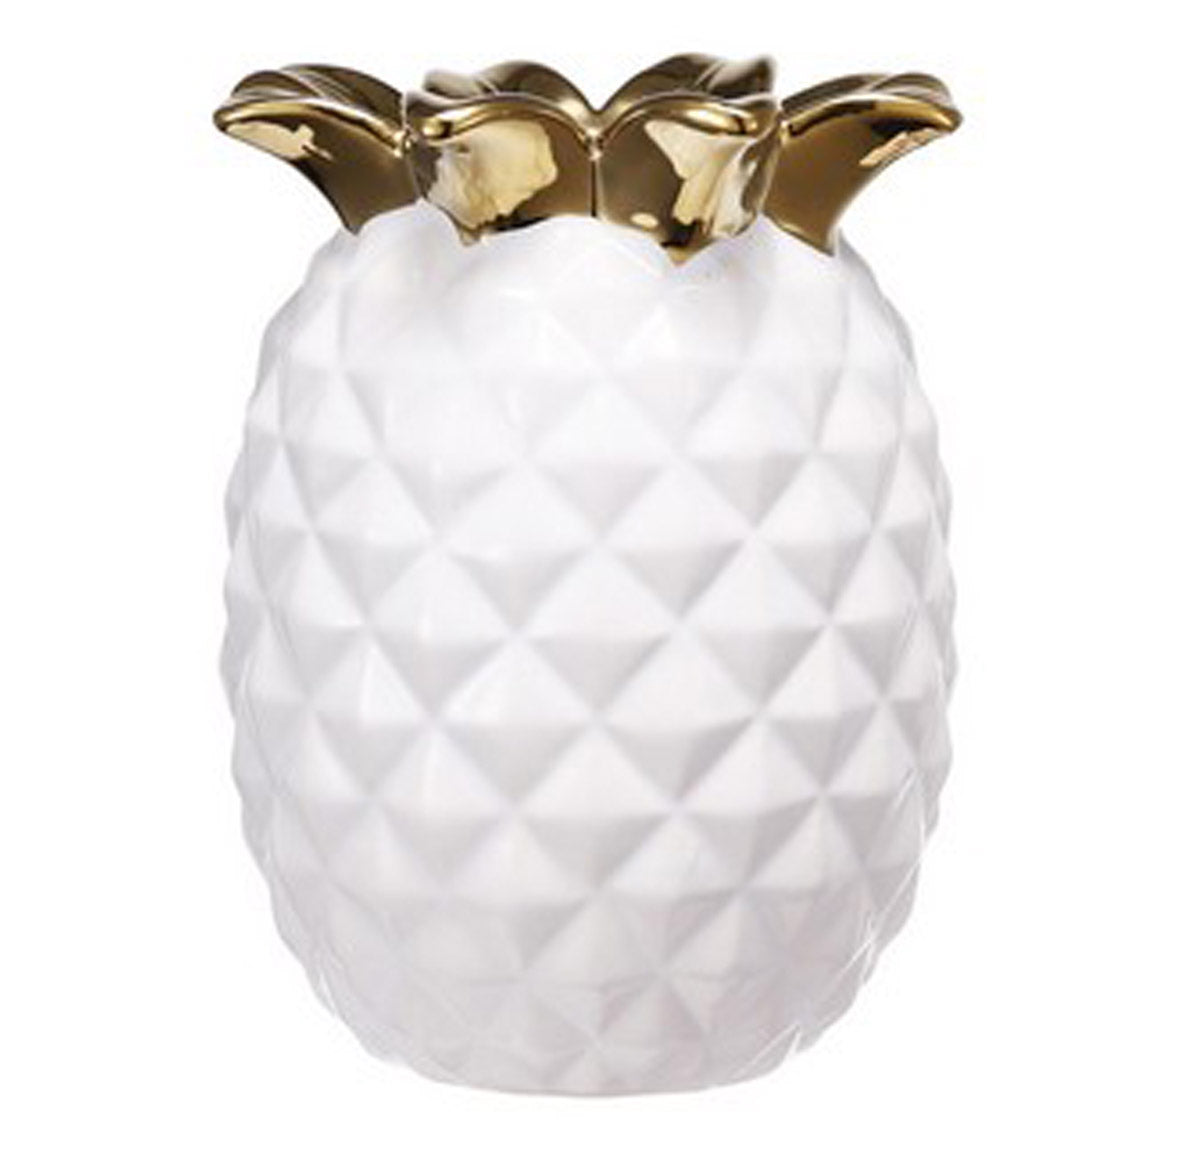 Decorative Pineapple Vase - white/gold - Home Decor | mishLifestyle